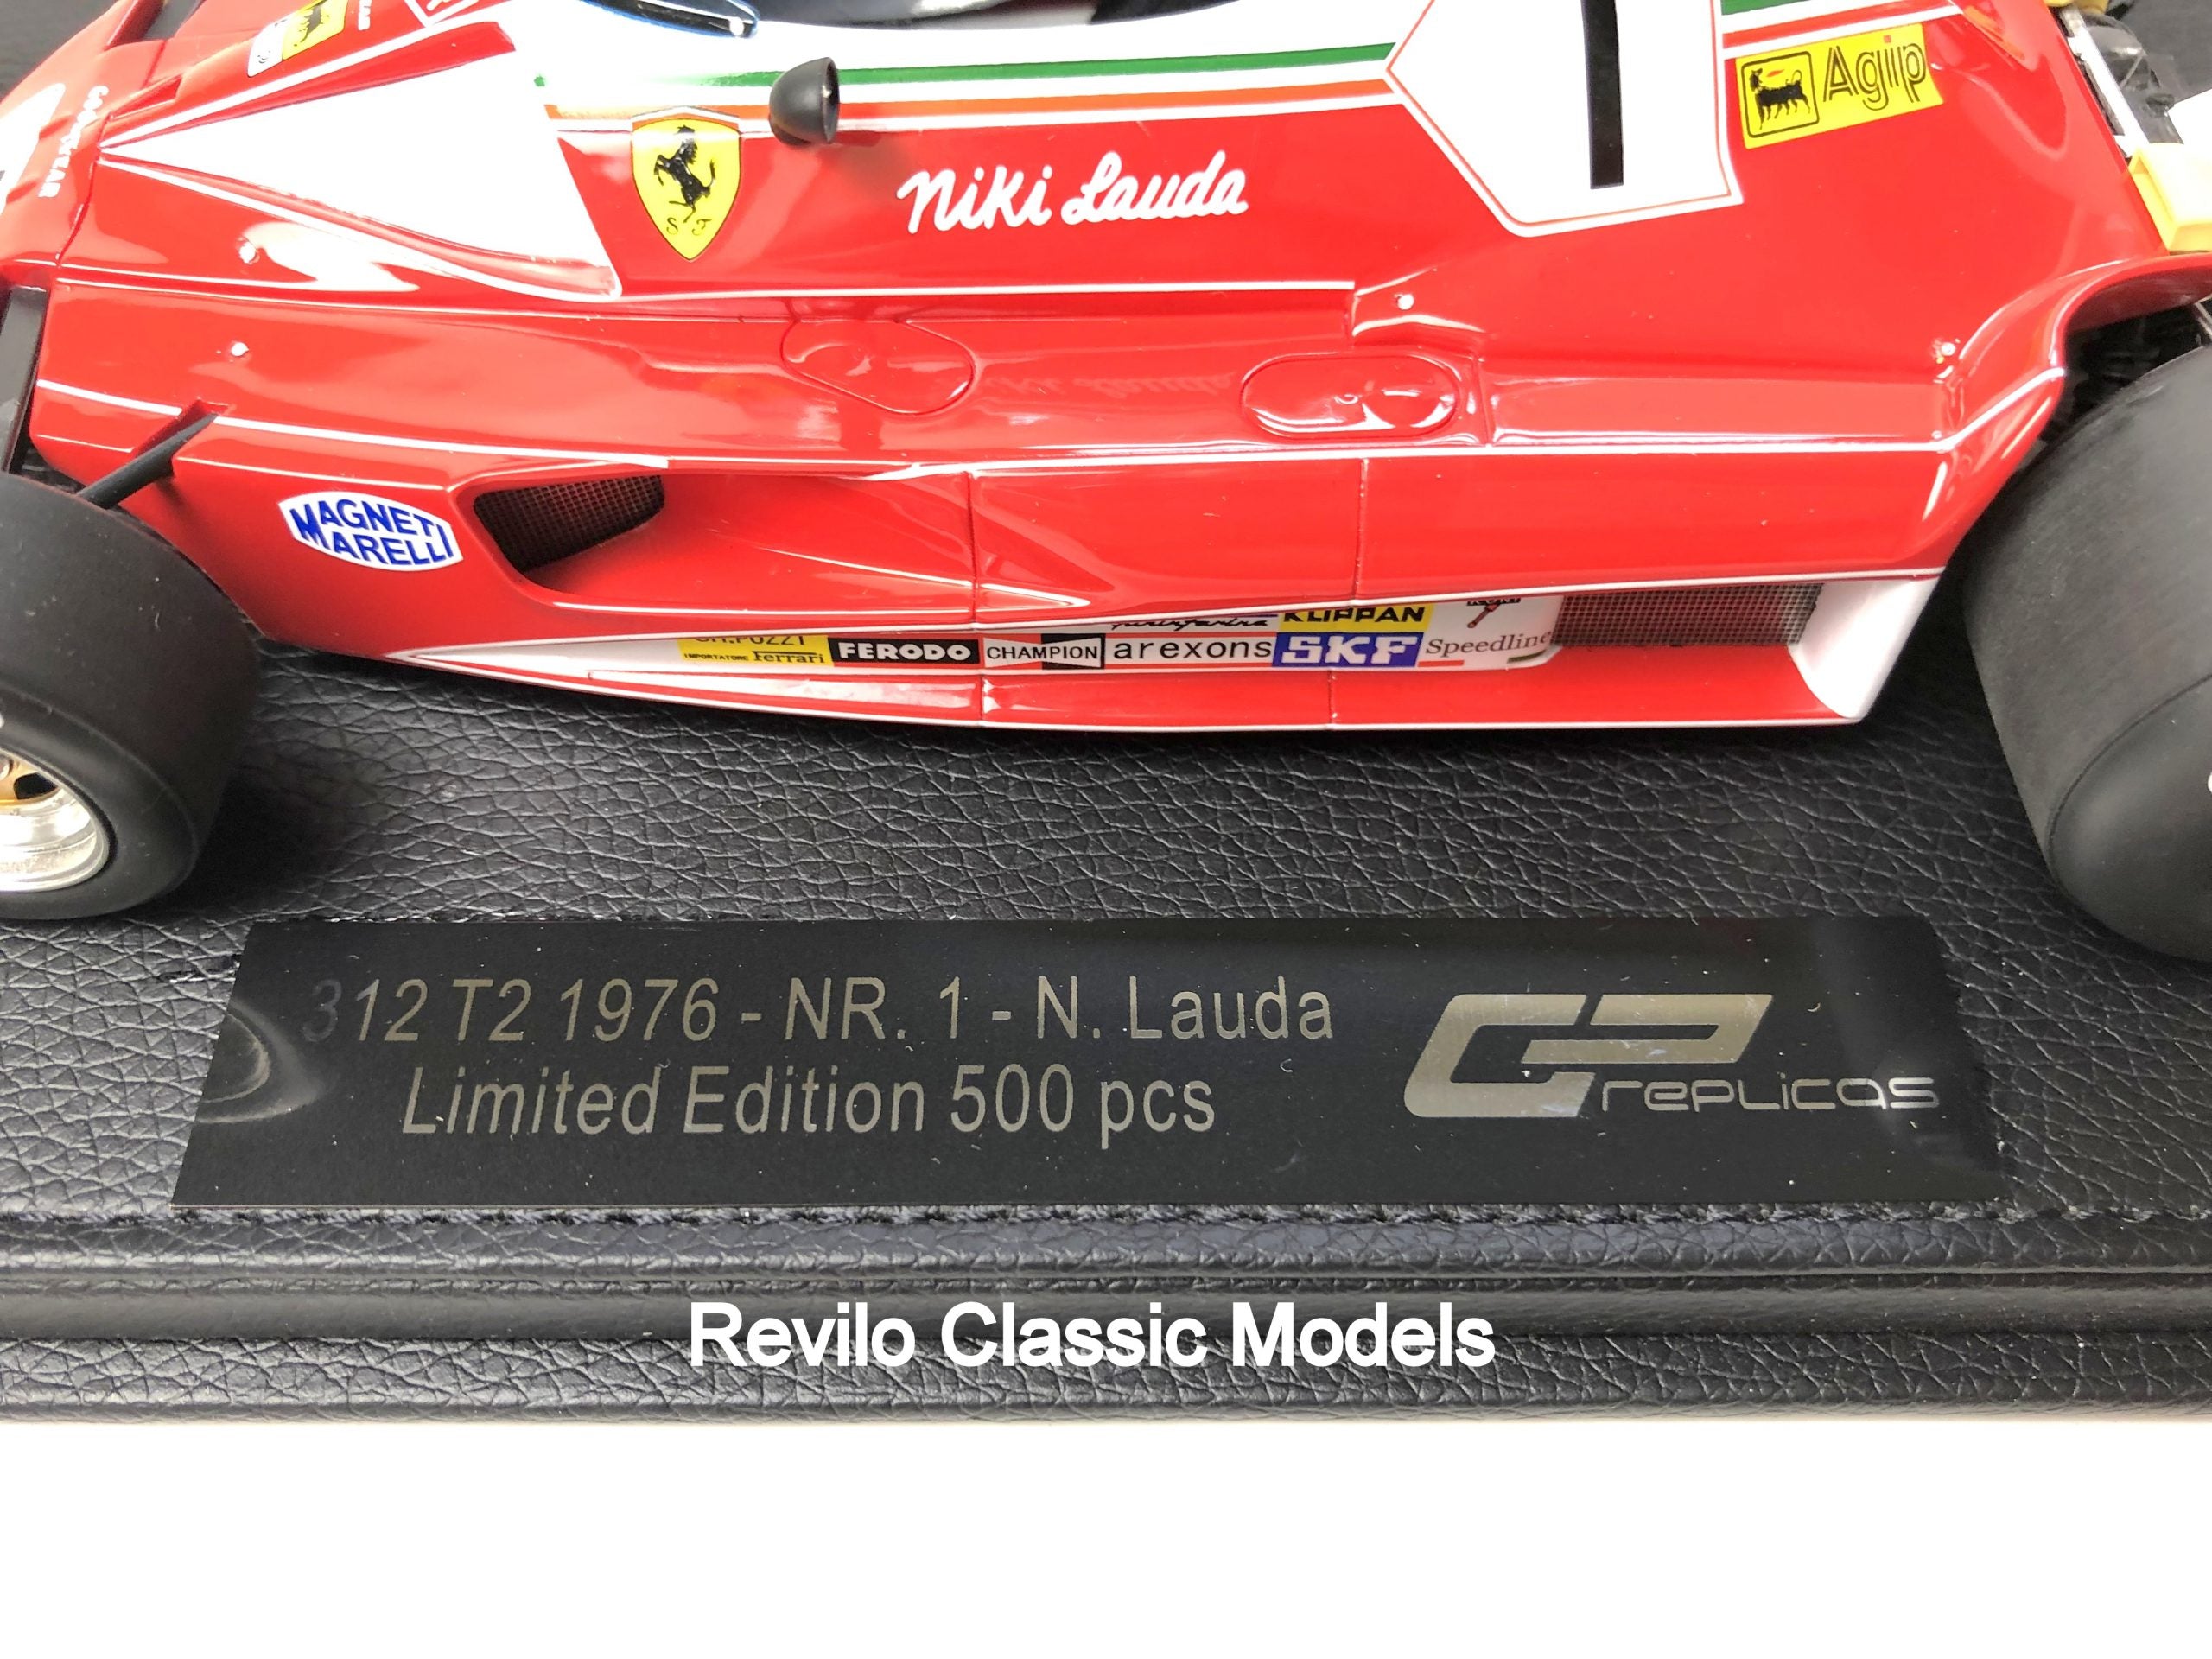 1:18 Ferrari 312 T2 Niki Lauda #1